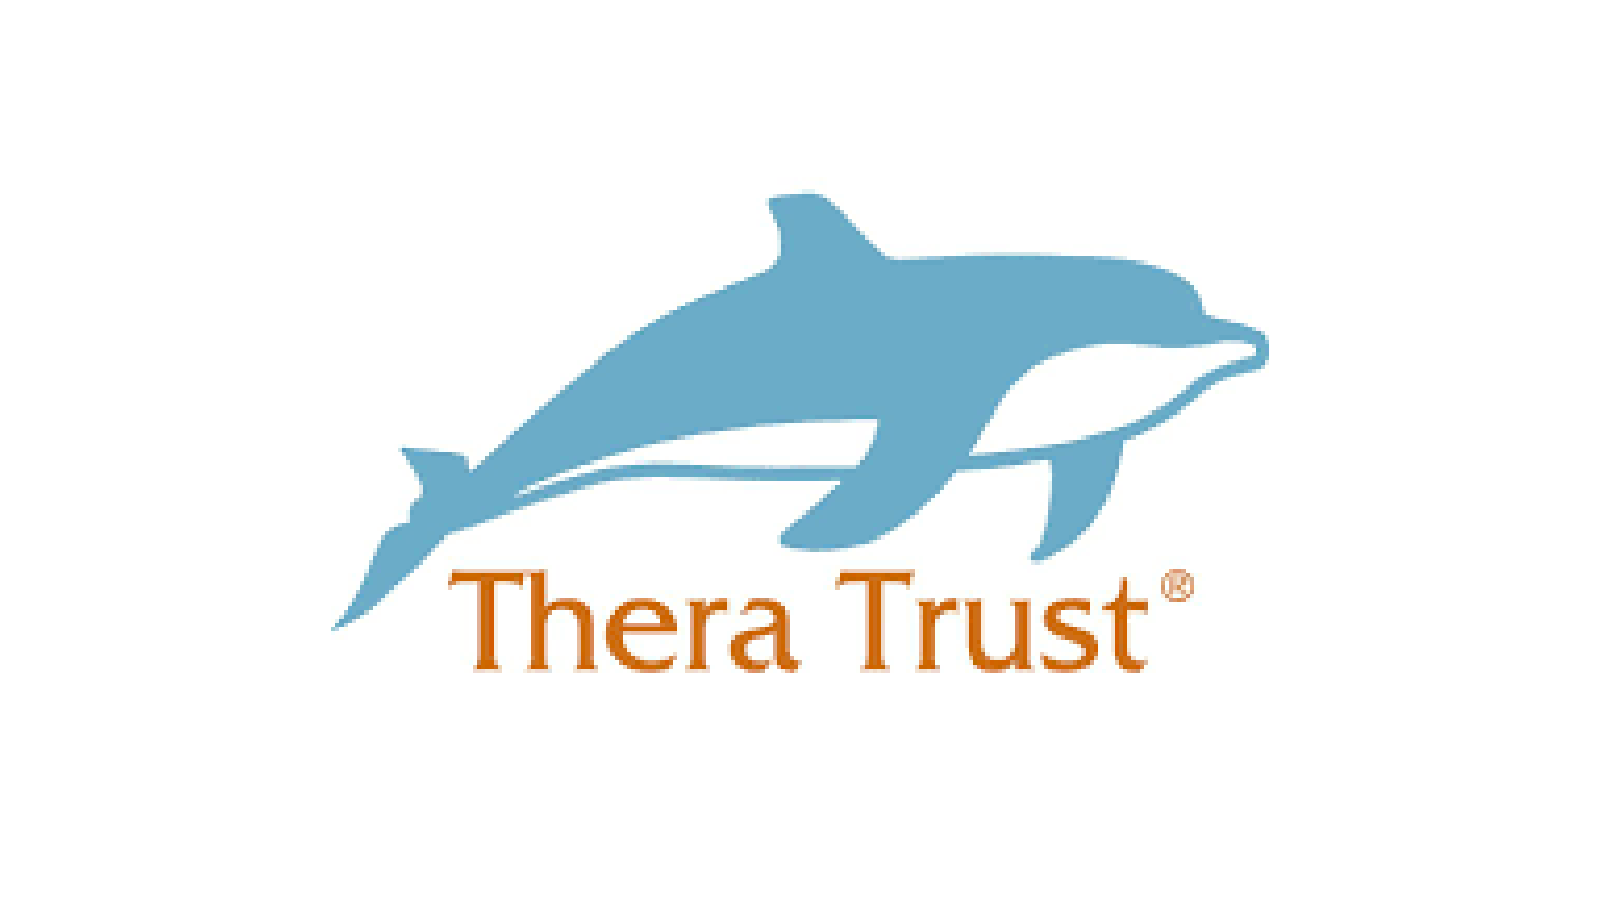 Thera trust logo